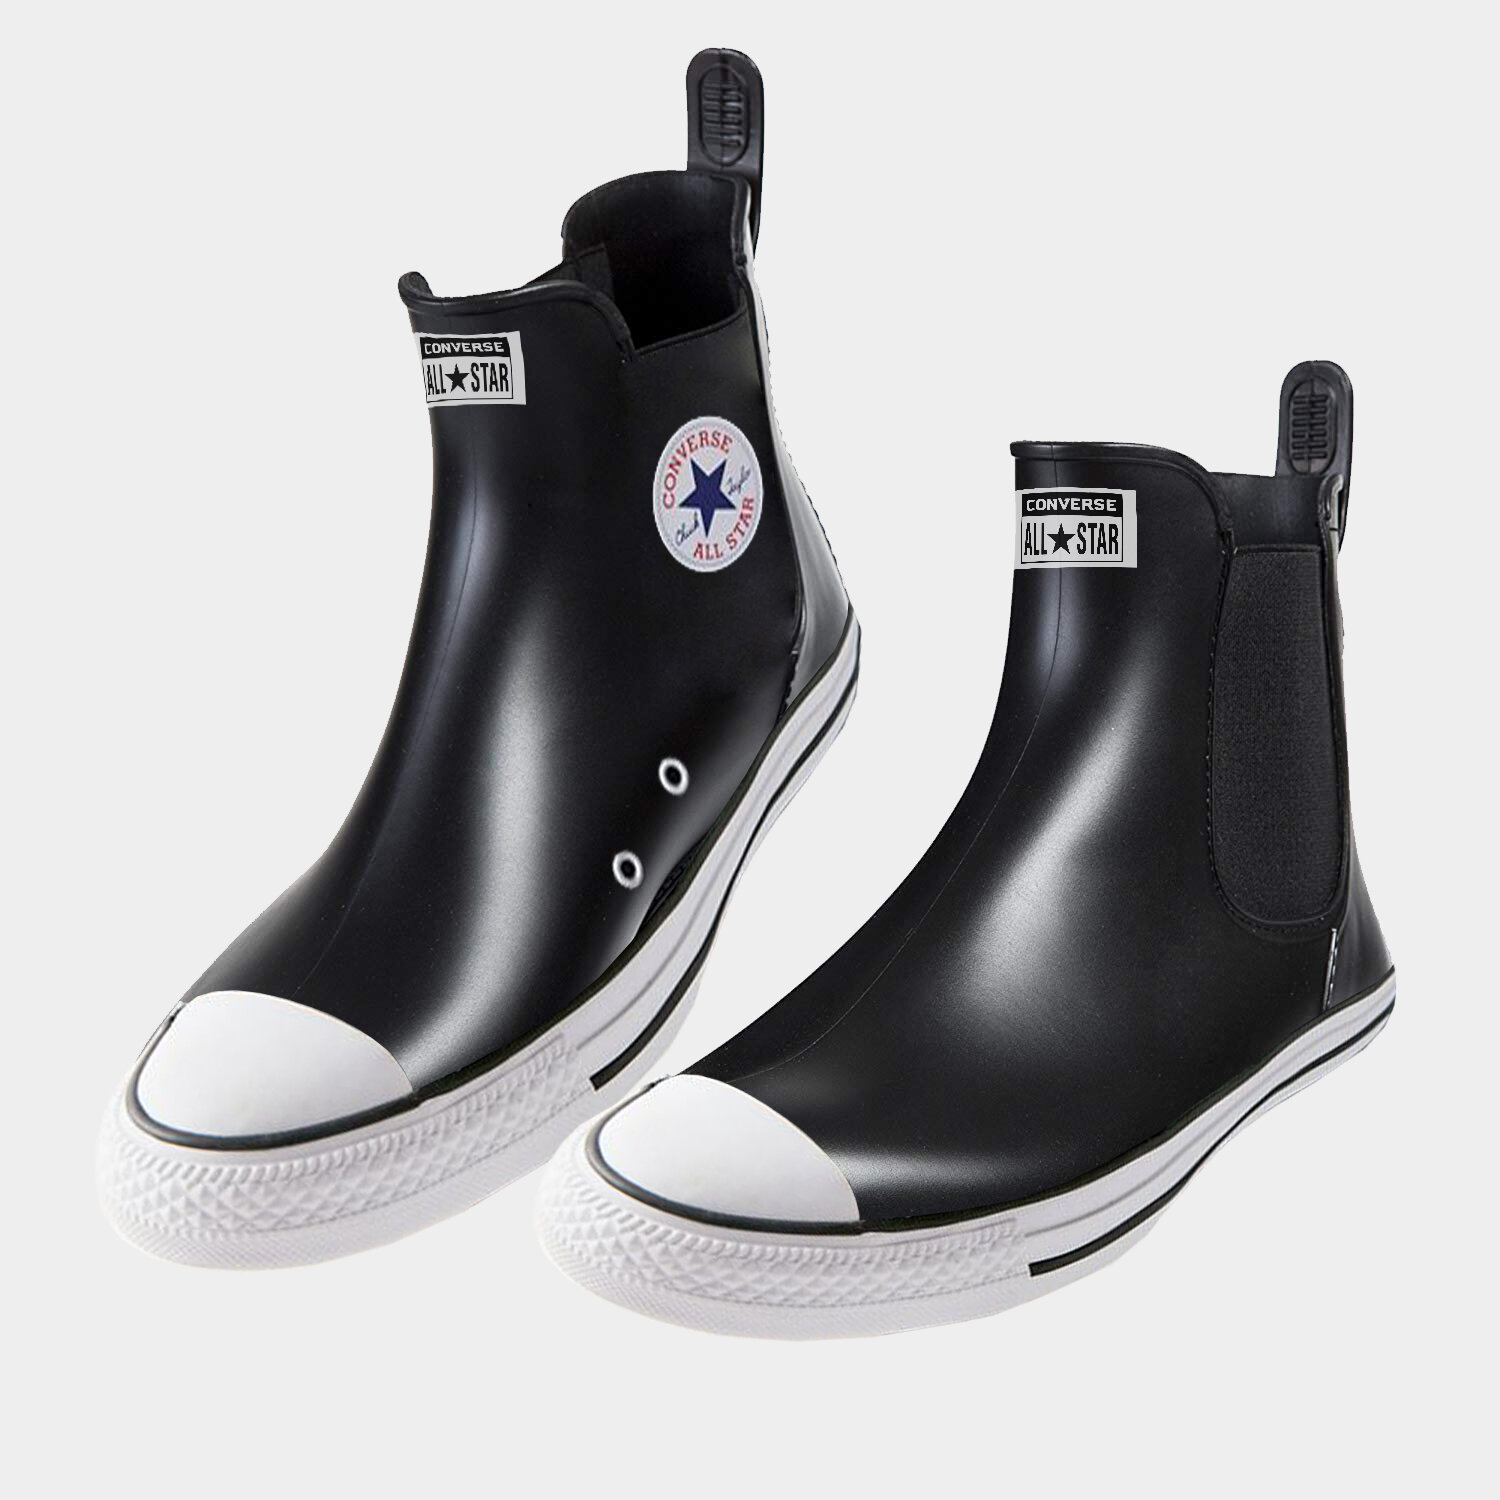 converse rain shoes